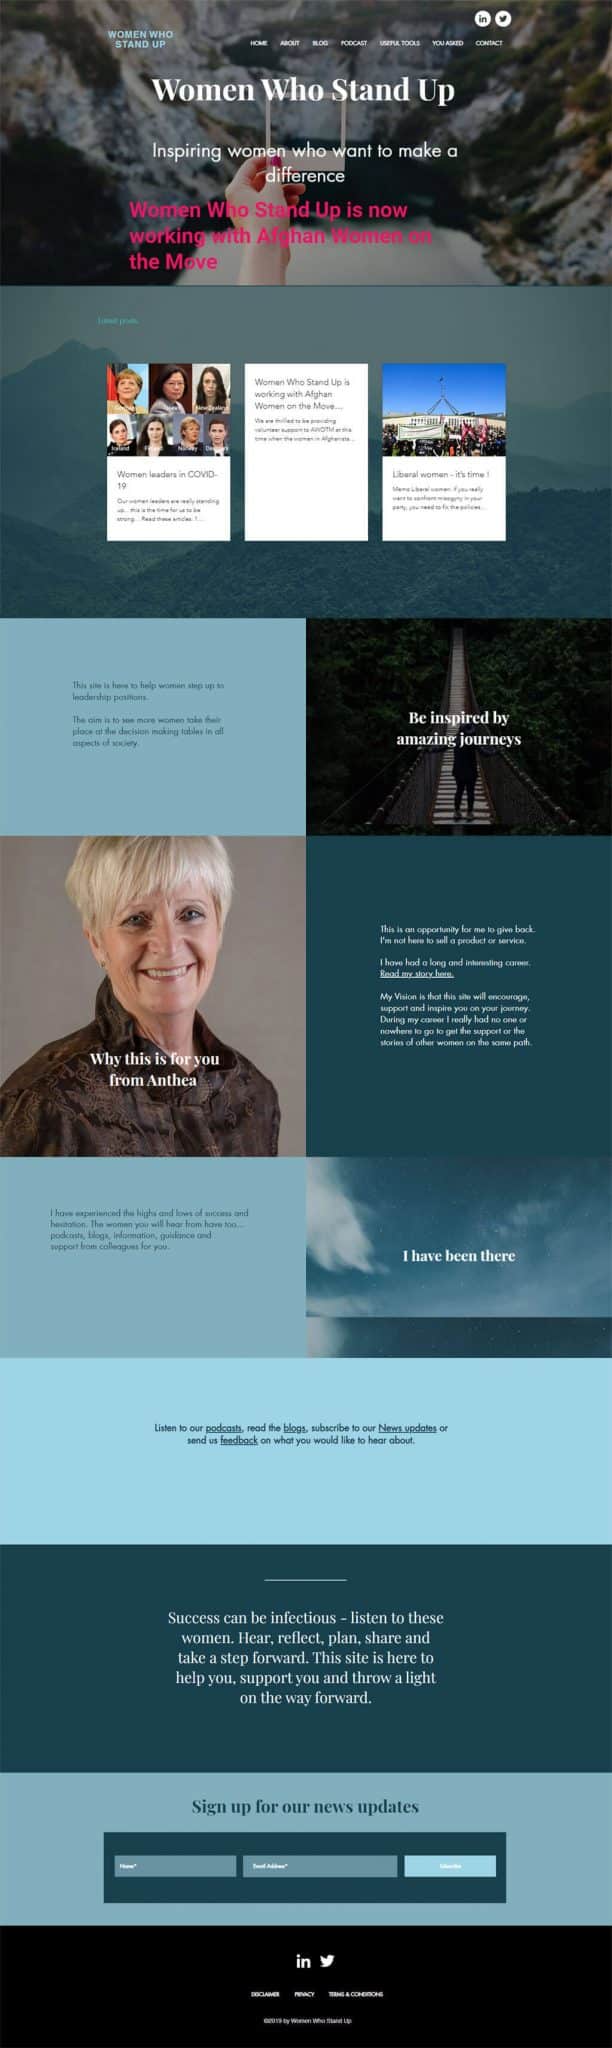 Website designed for Women's advocacy